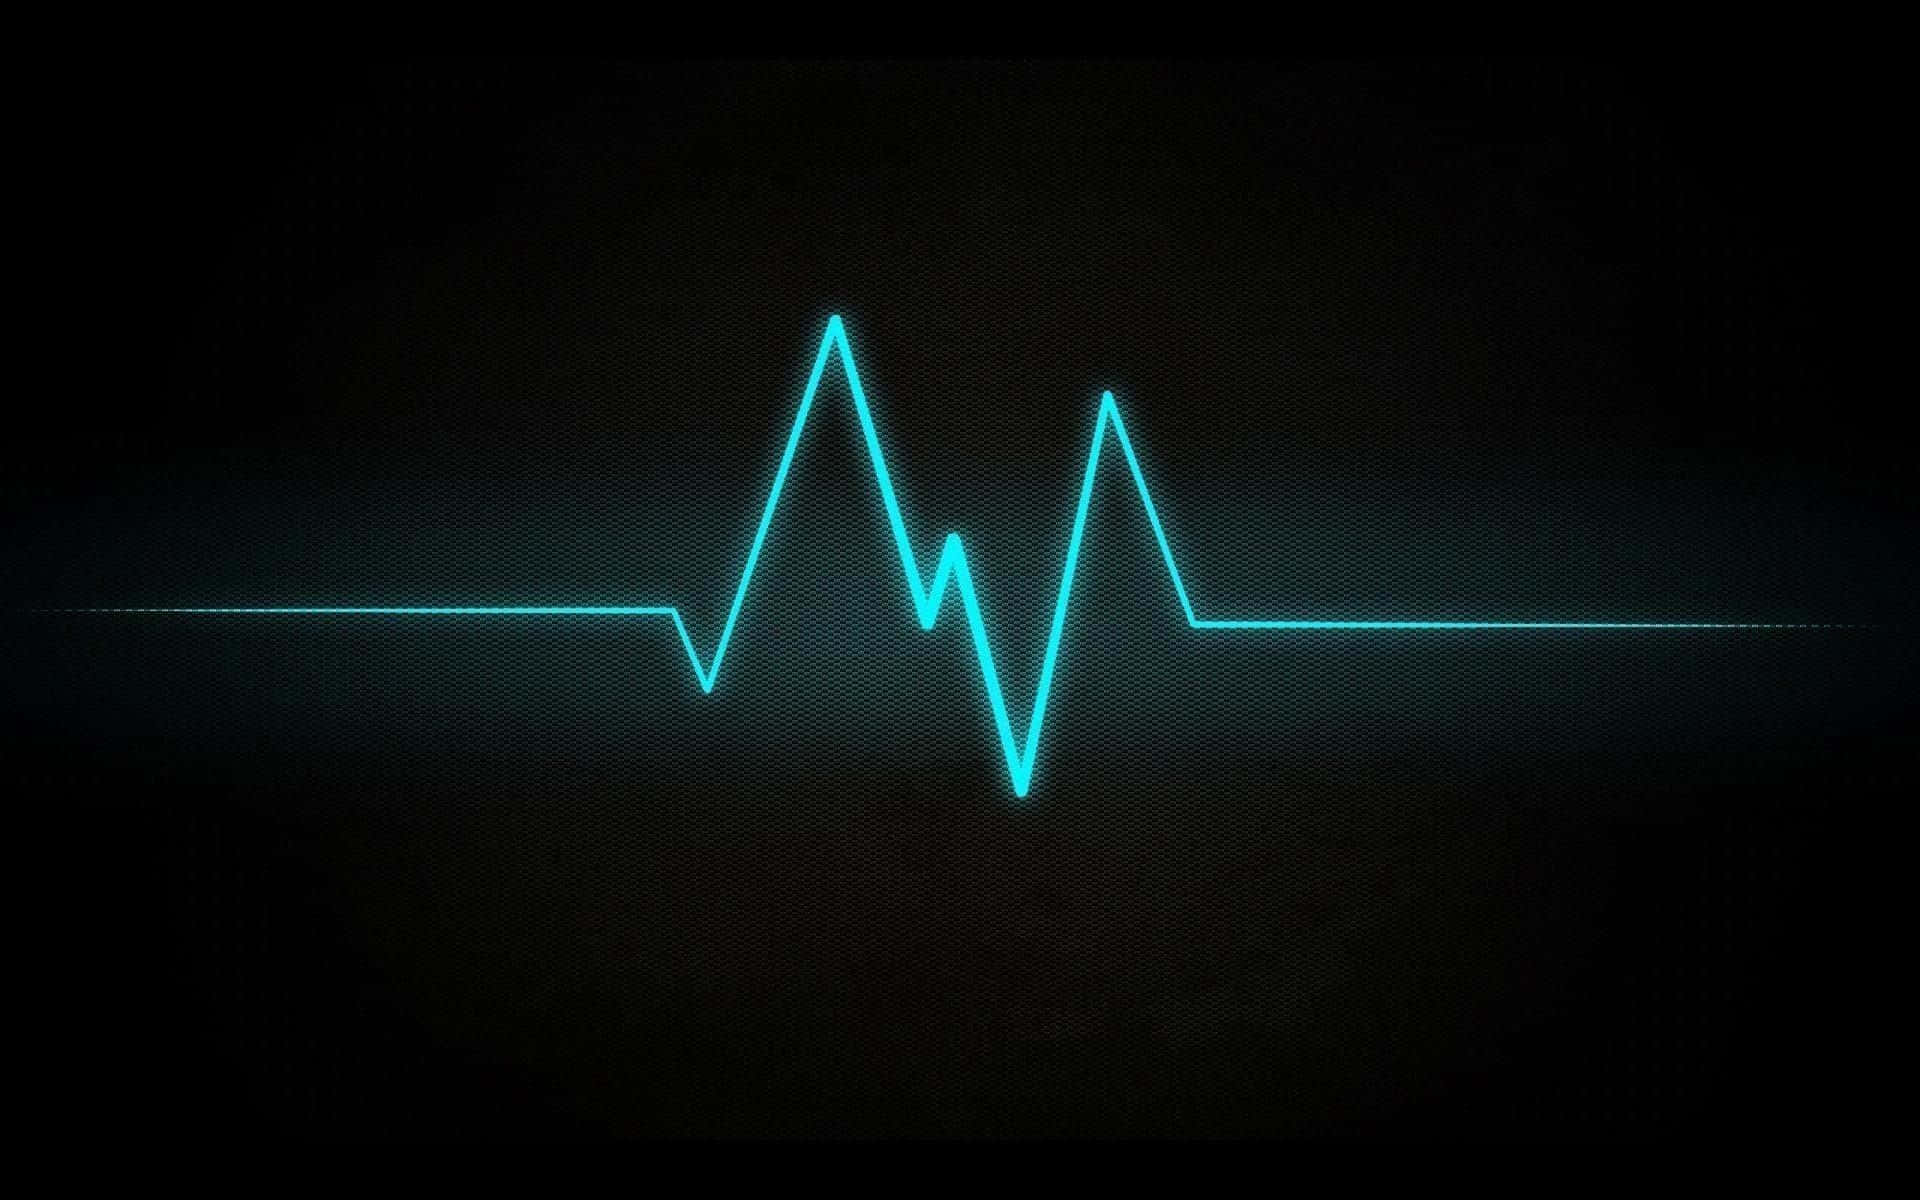 A Blue Heartbeat On A Black Background